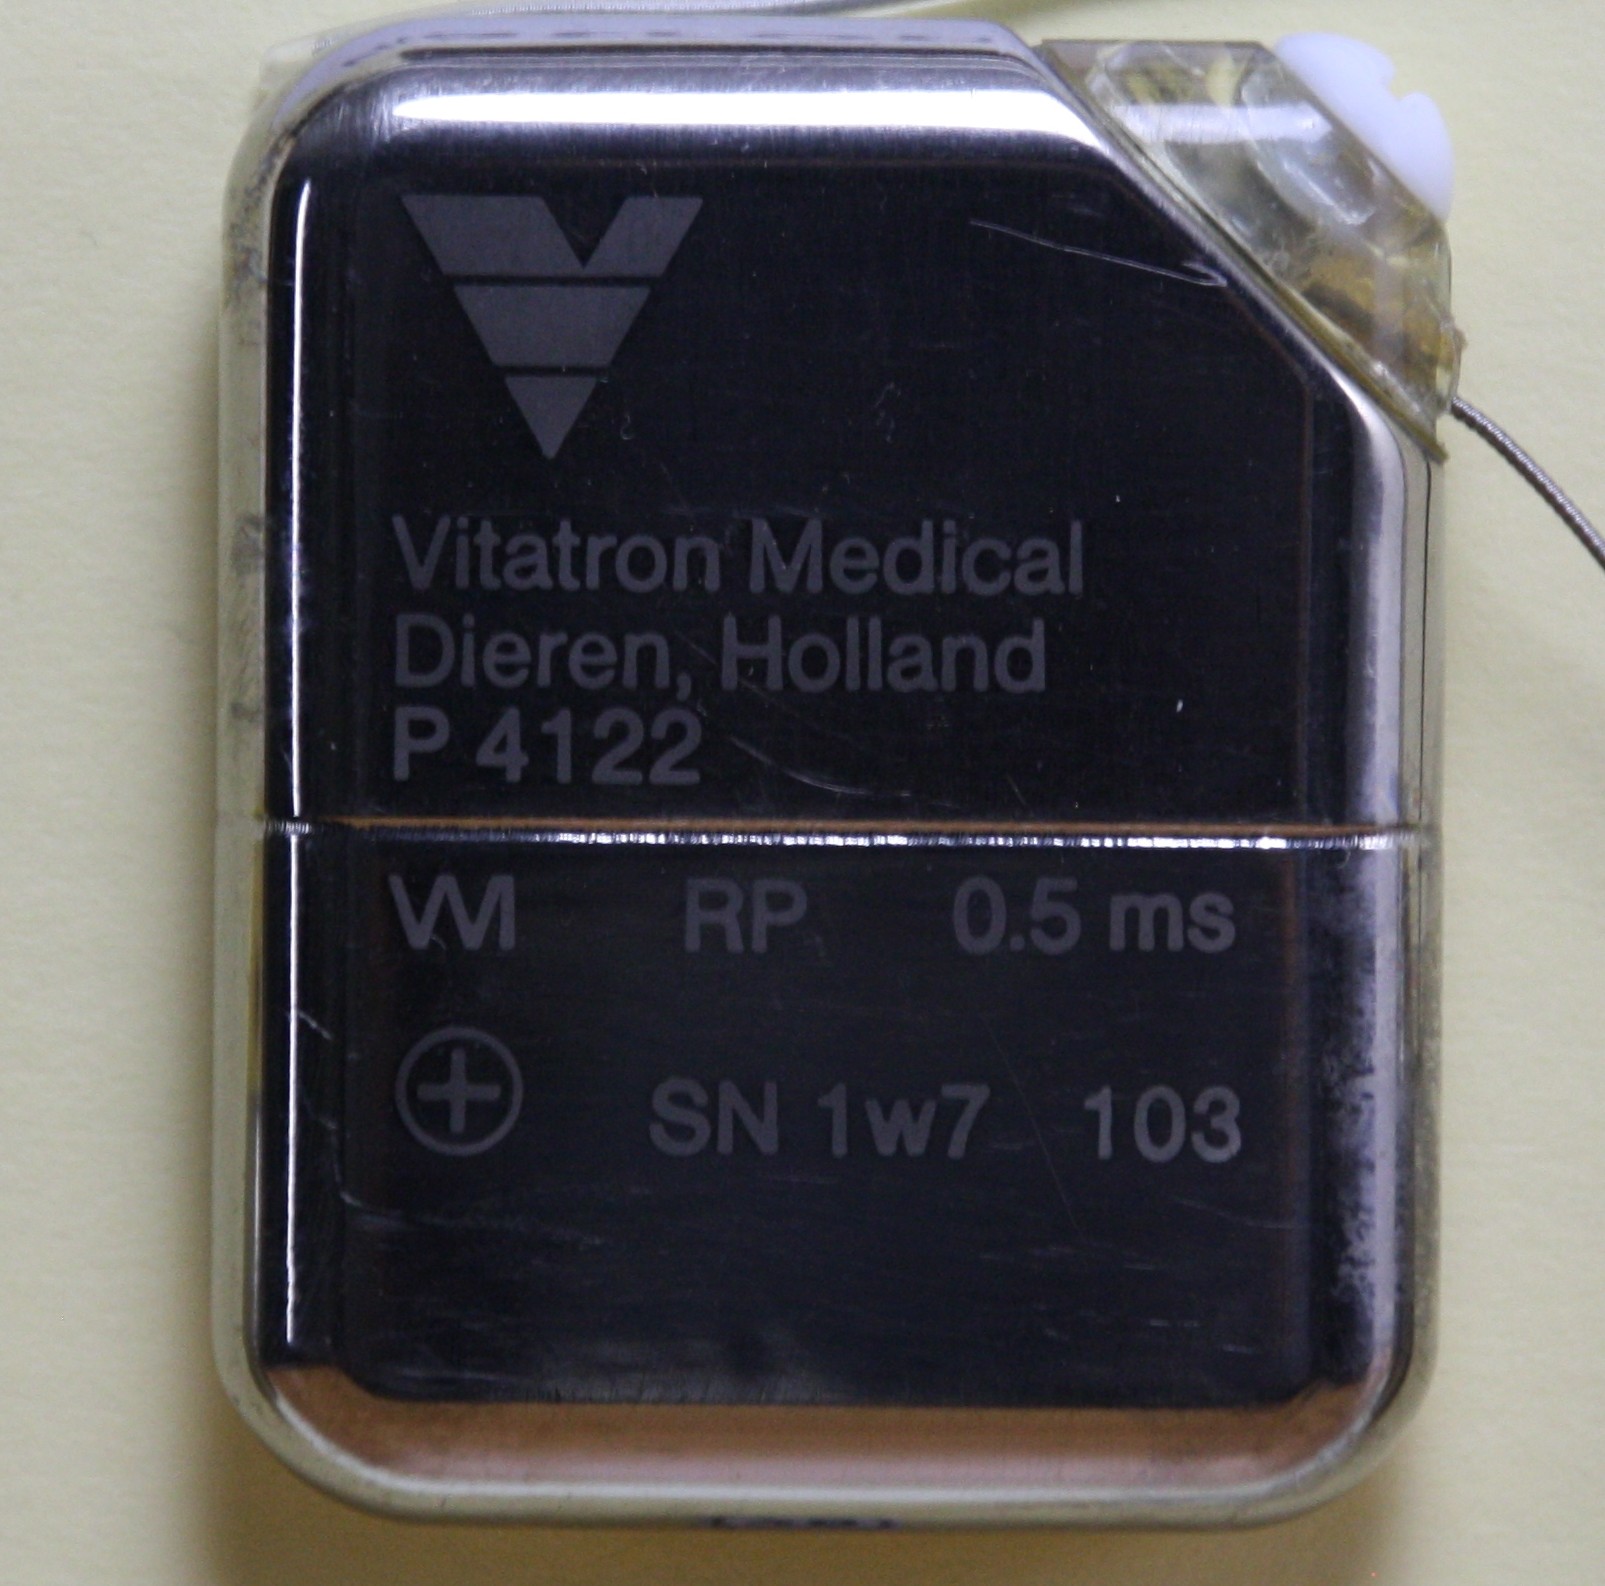 Herzschrittmacher-Implantat Vitatron Medical P 4122 (Krankenhausmuseum Bielefeld e.V. CC BY-NC-SA)